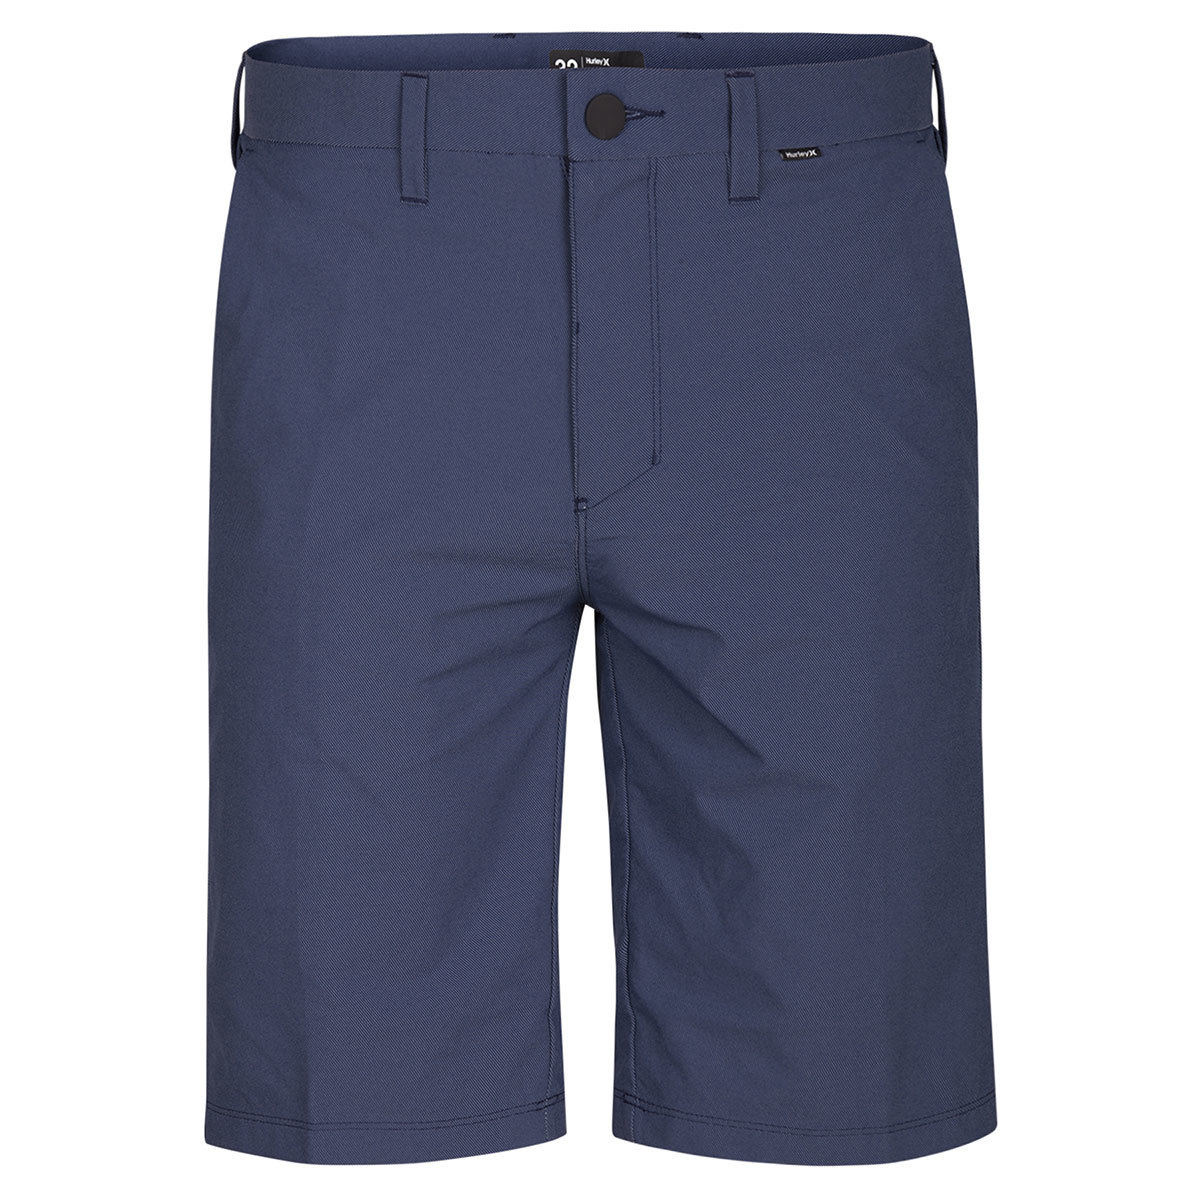 Hurley Guys' Dri-Fit Chino Shorts - Blue, 34